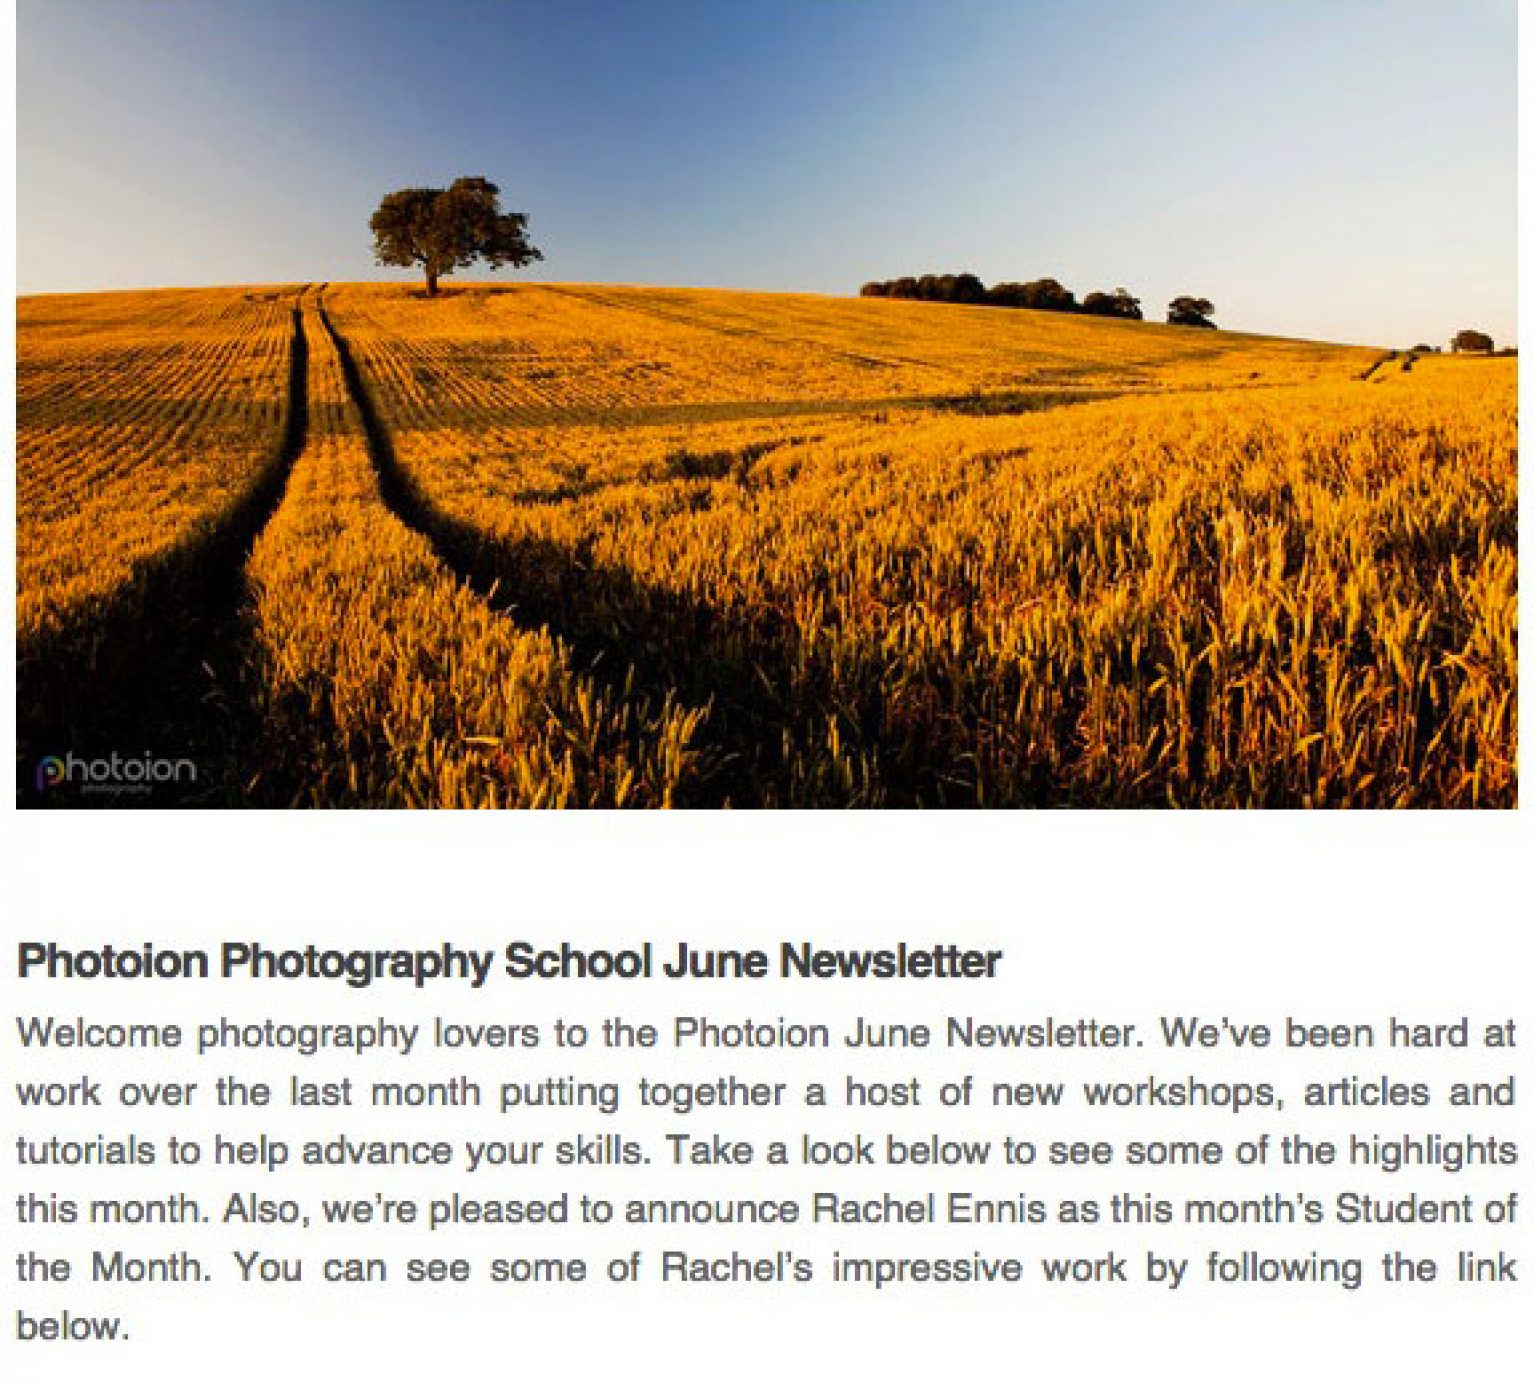 photoion_photography_school_newsletter_june